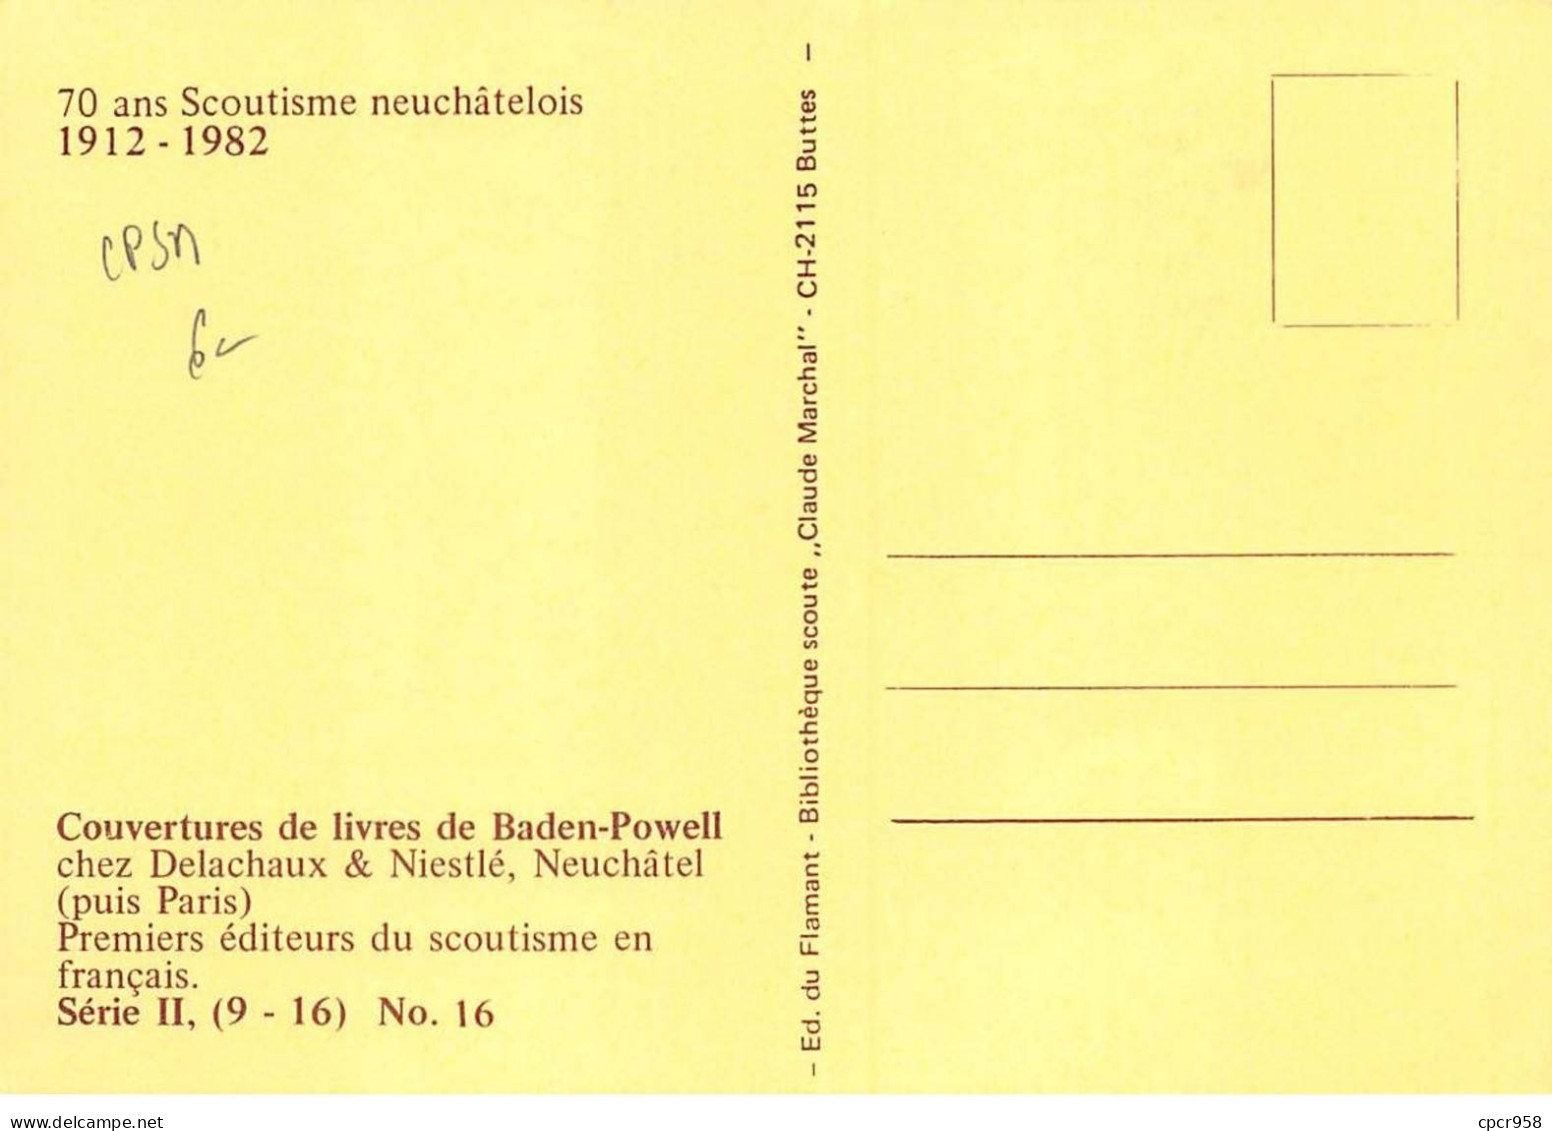 SCOUTISME - SAN36095 - 70 Ans Scoutisme Neuchâtelois - Couvertures Livres Baden- Série II, (9-16), N°16  - CPSM 15x10 Cm - Pfadfinder-Bewegung